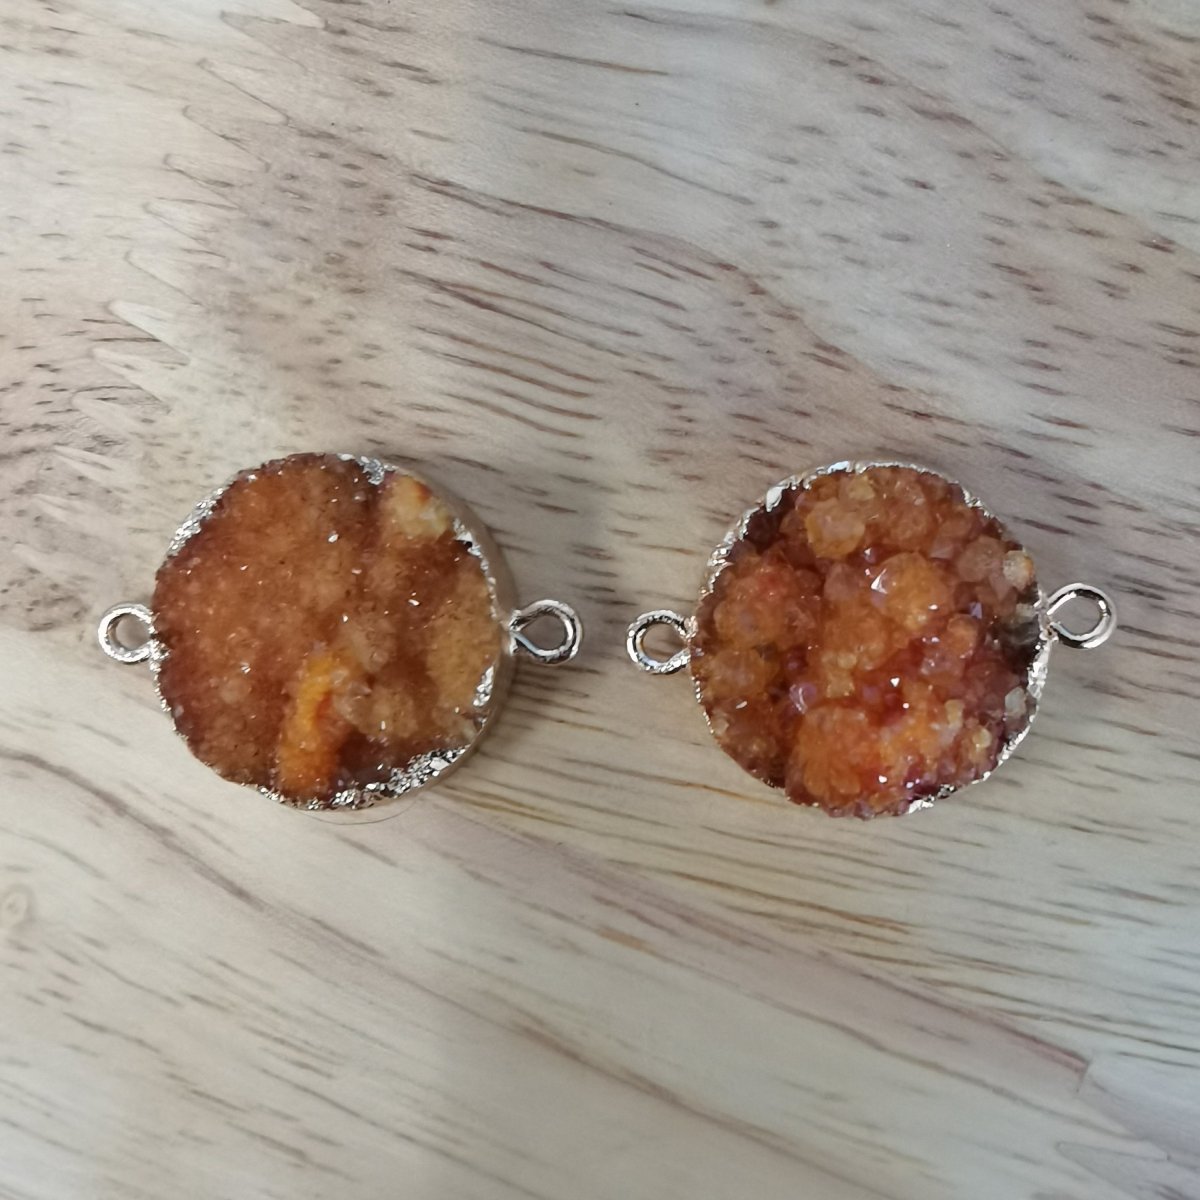 1pc Gold Edge Orange Druzy Gemstone Ladies Girl Gift DIY Craft Bracelet Charm Bead Connector Pendant Finding for Jewelry Making - DLUXCA